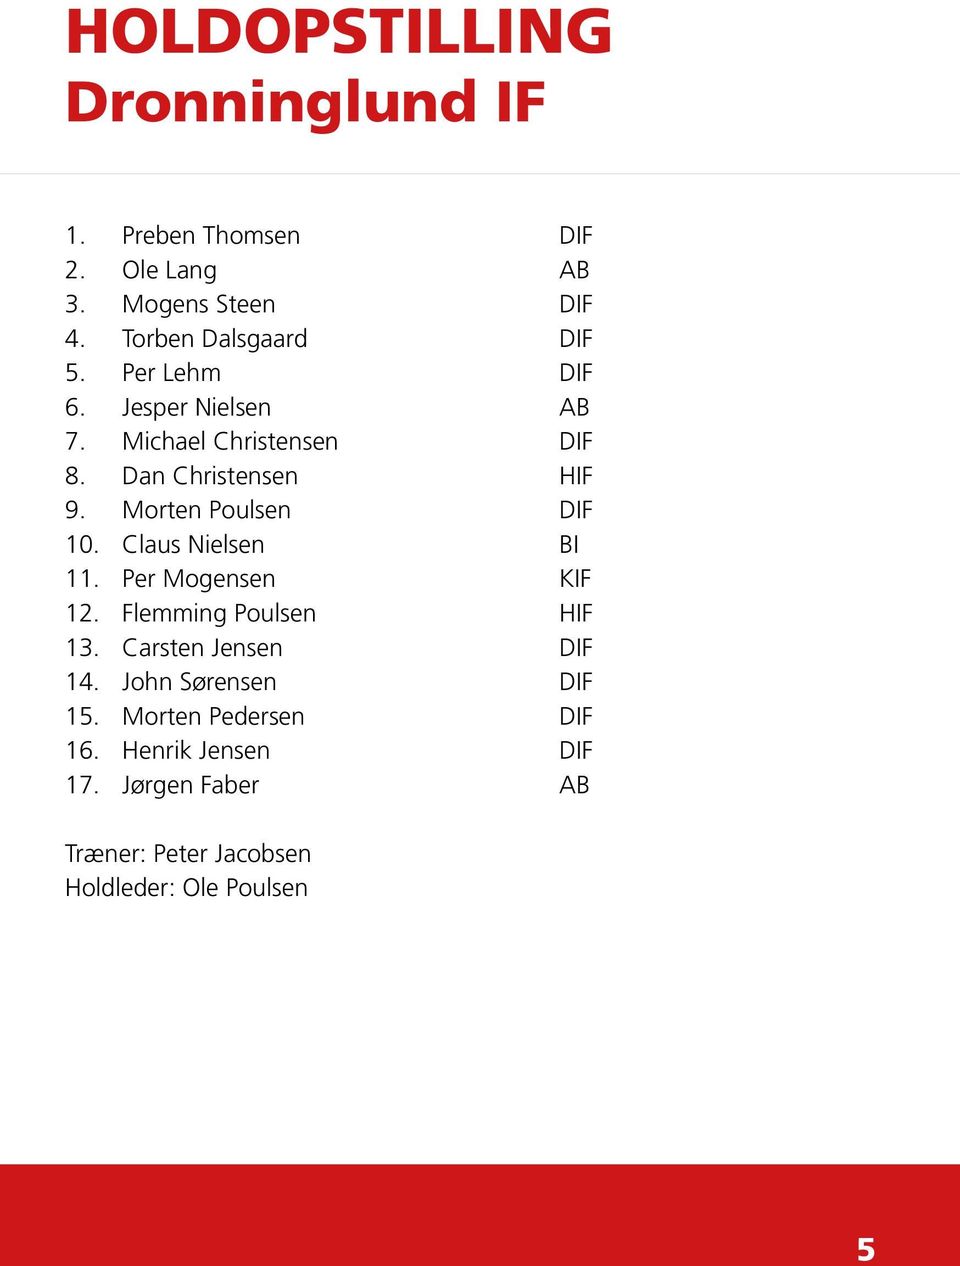 Morten Poulsen DIF 10. Claus Nielsen BI 11. Per Mogensen KIF 12. Flemming Poulsen HIF 13. Carsten Jensen DIF 14.